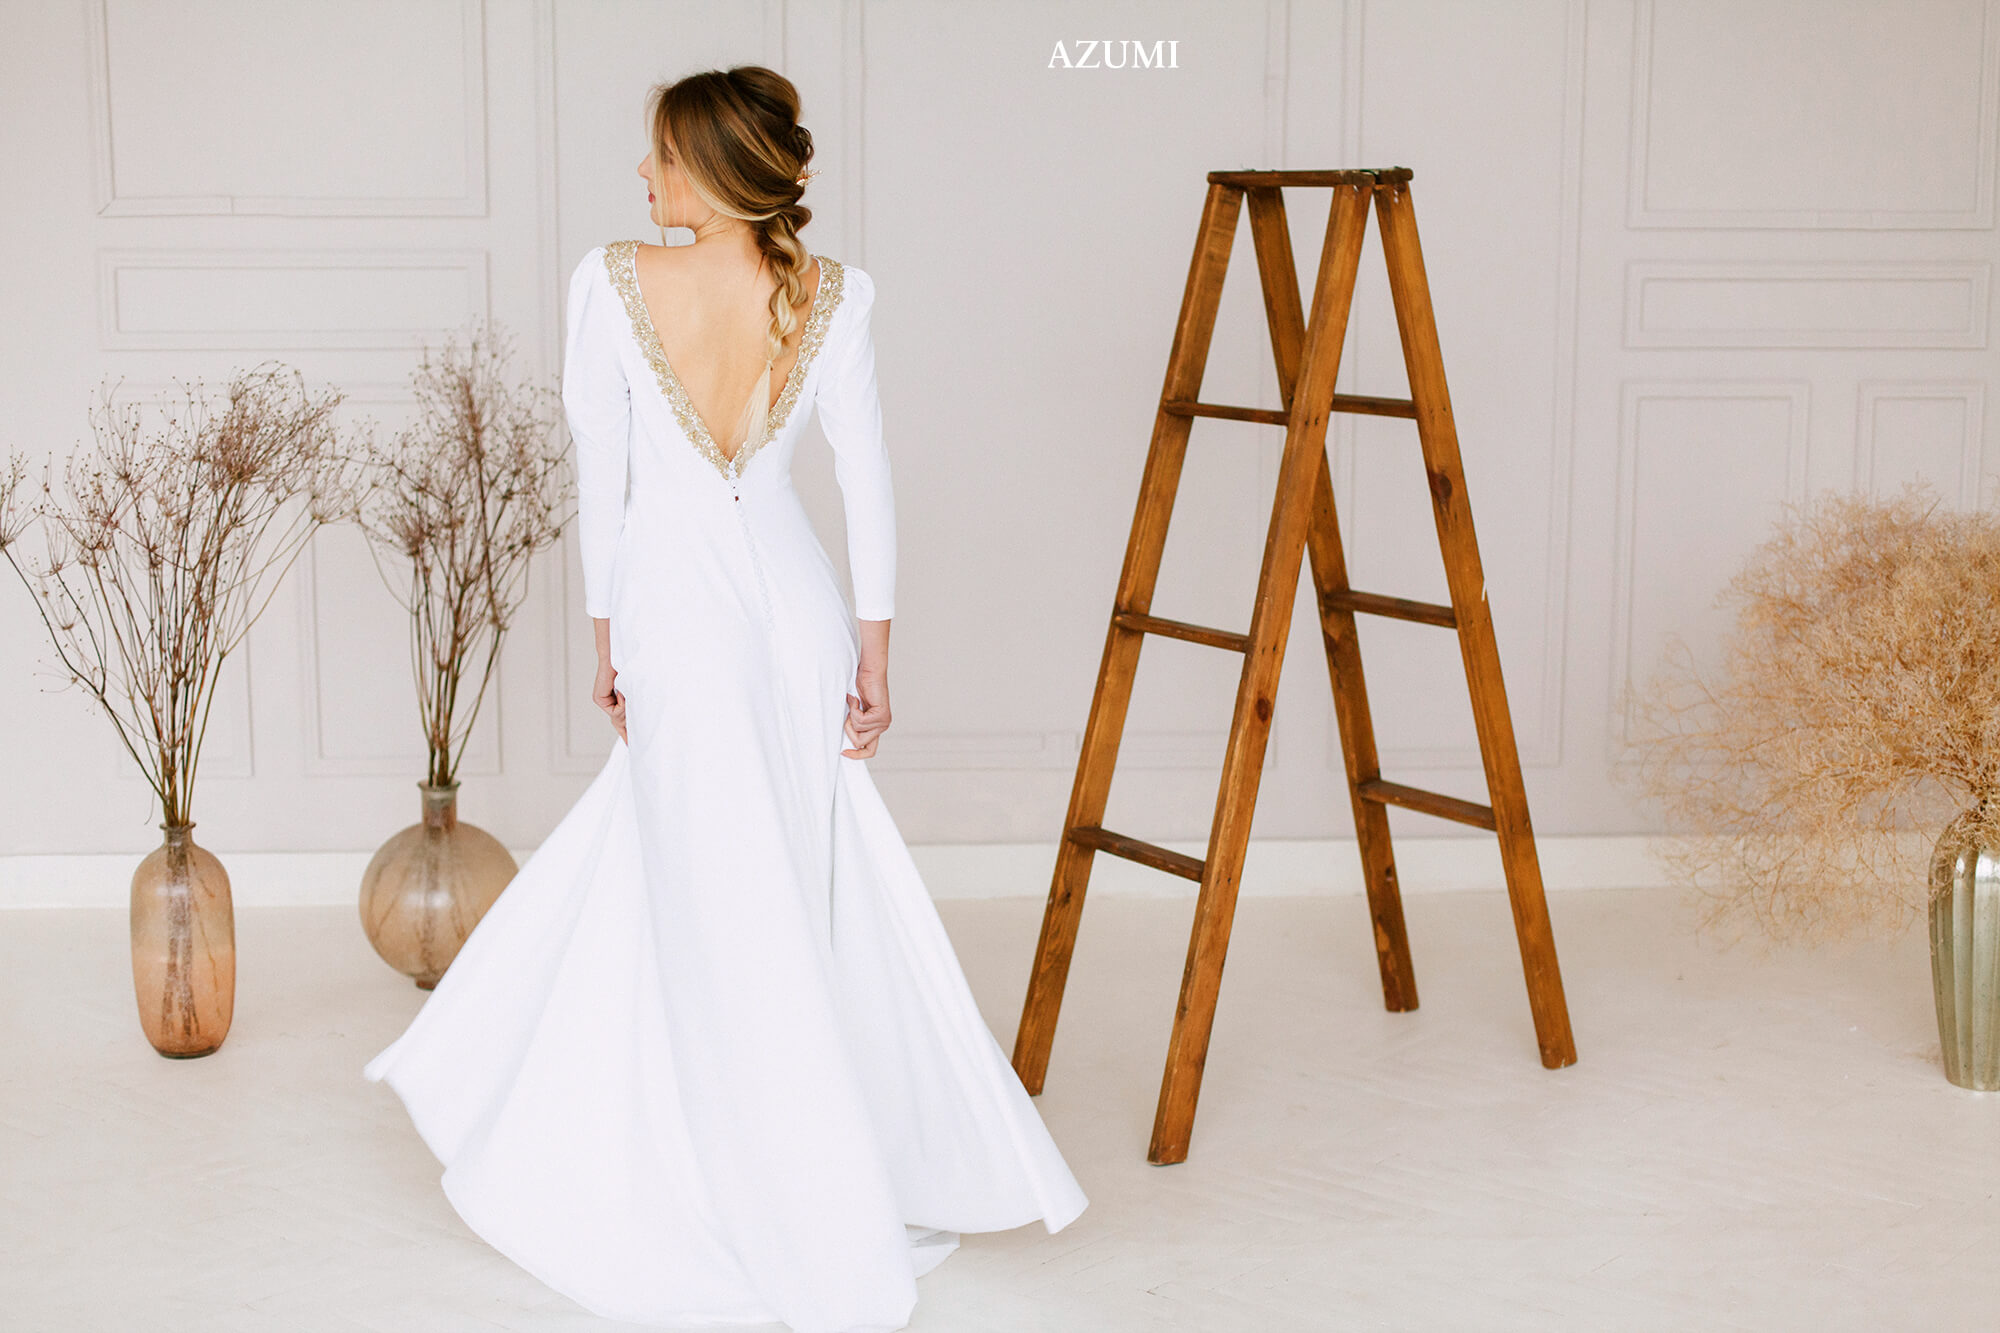 AZUMI - wedding dress "Refined Elegance" collection